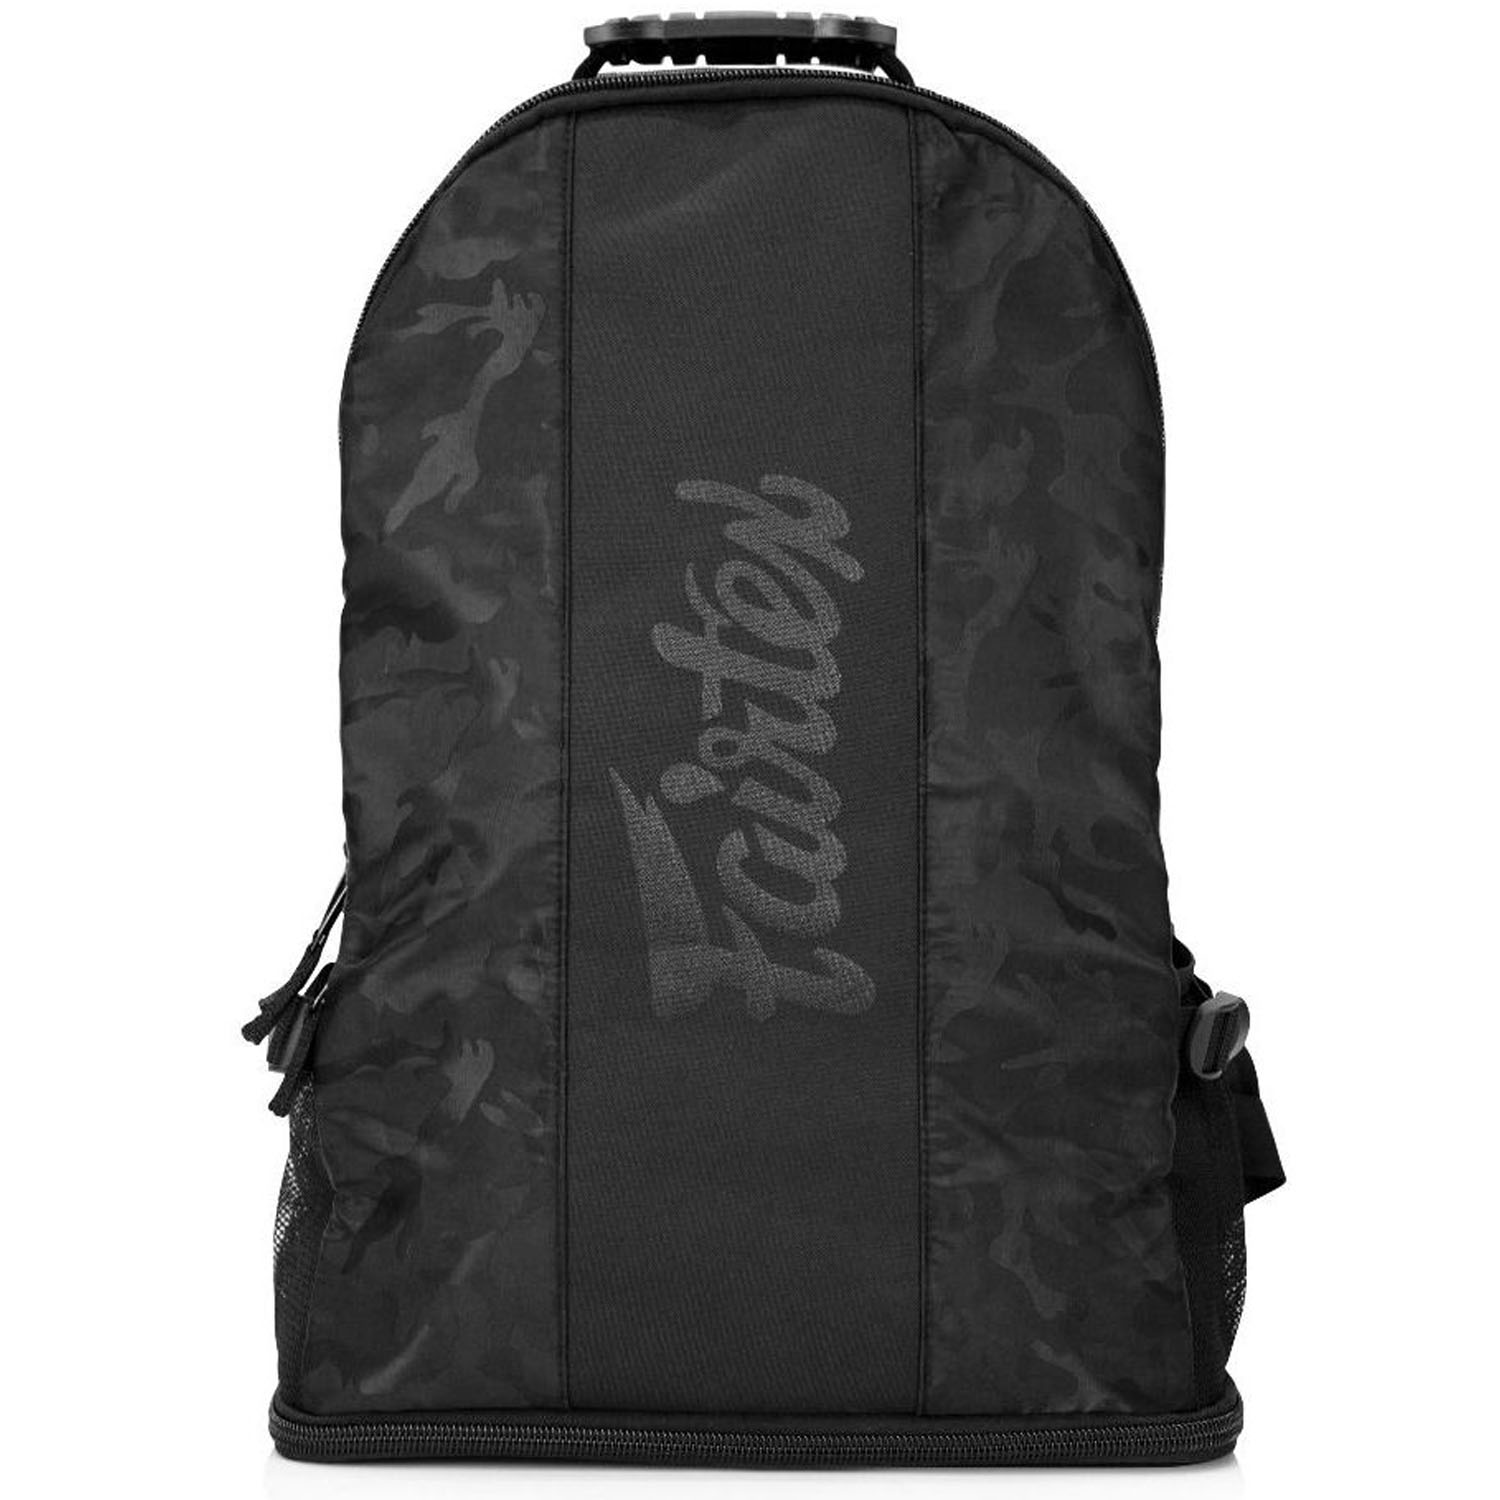 Fairtex Backpack, BAG4, black